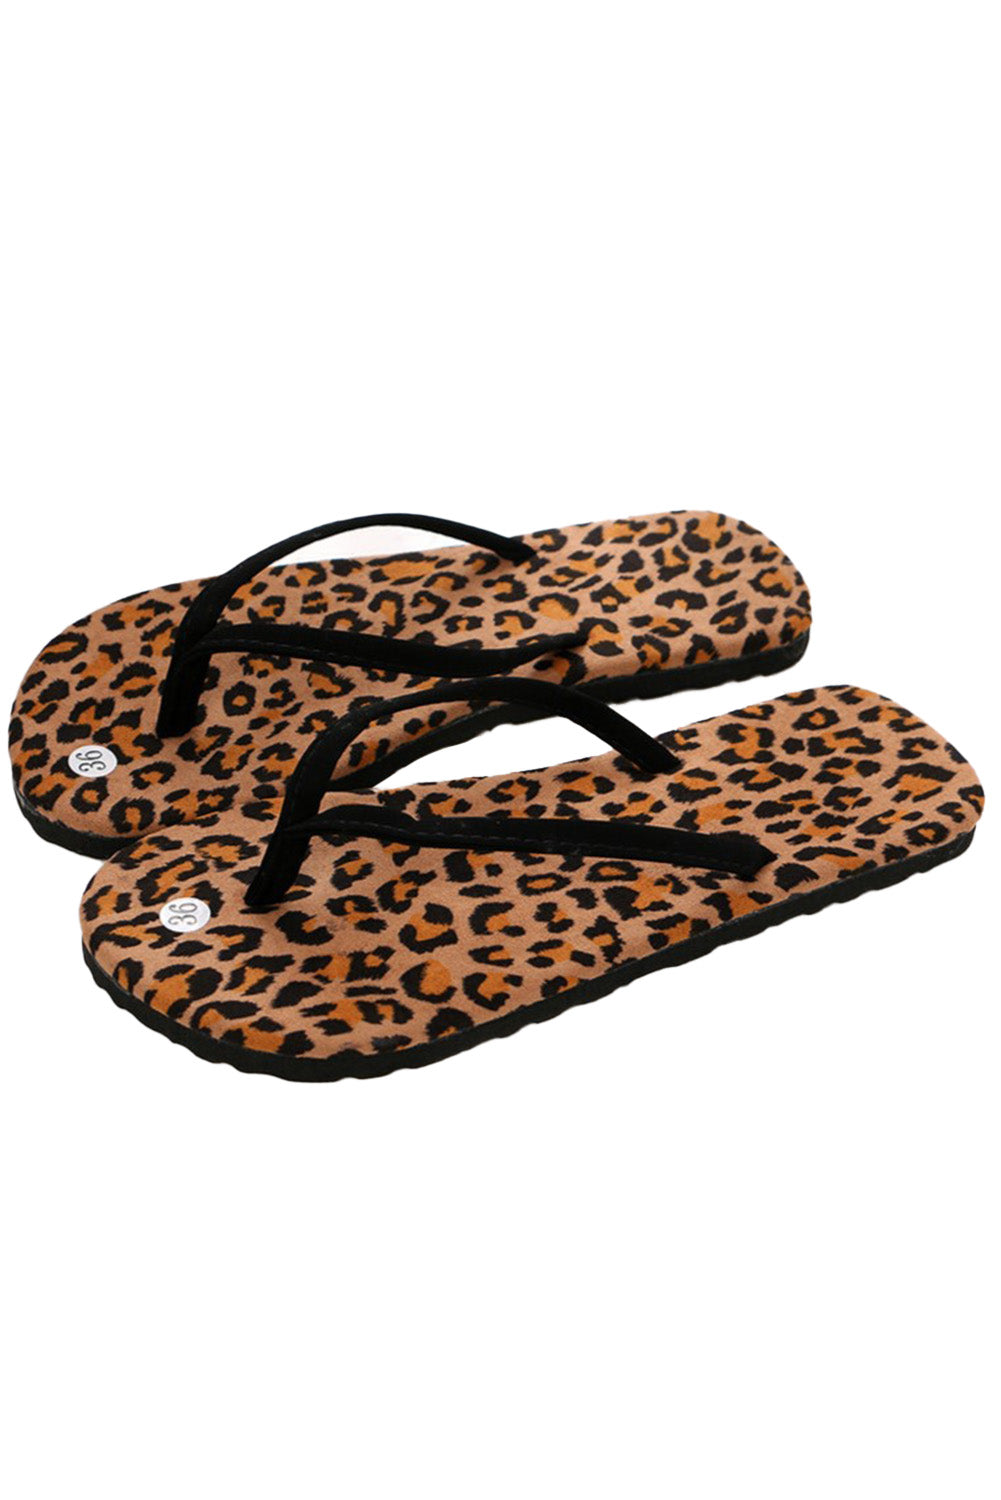 BH021331-20-37, BH021331-20-38, BH021331-20-39, BH021331-20-40, Women's Animal Print Flip Flops Non-slip Leopard Summer Sandals